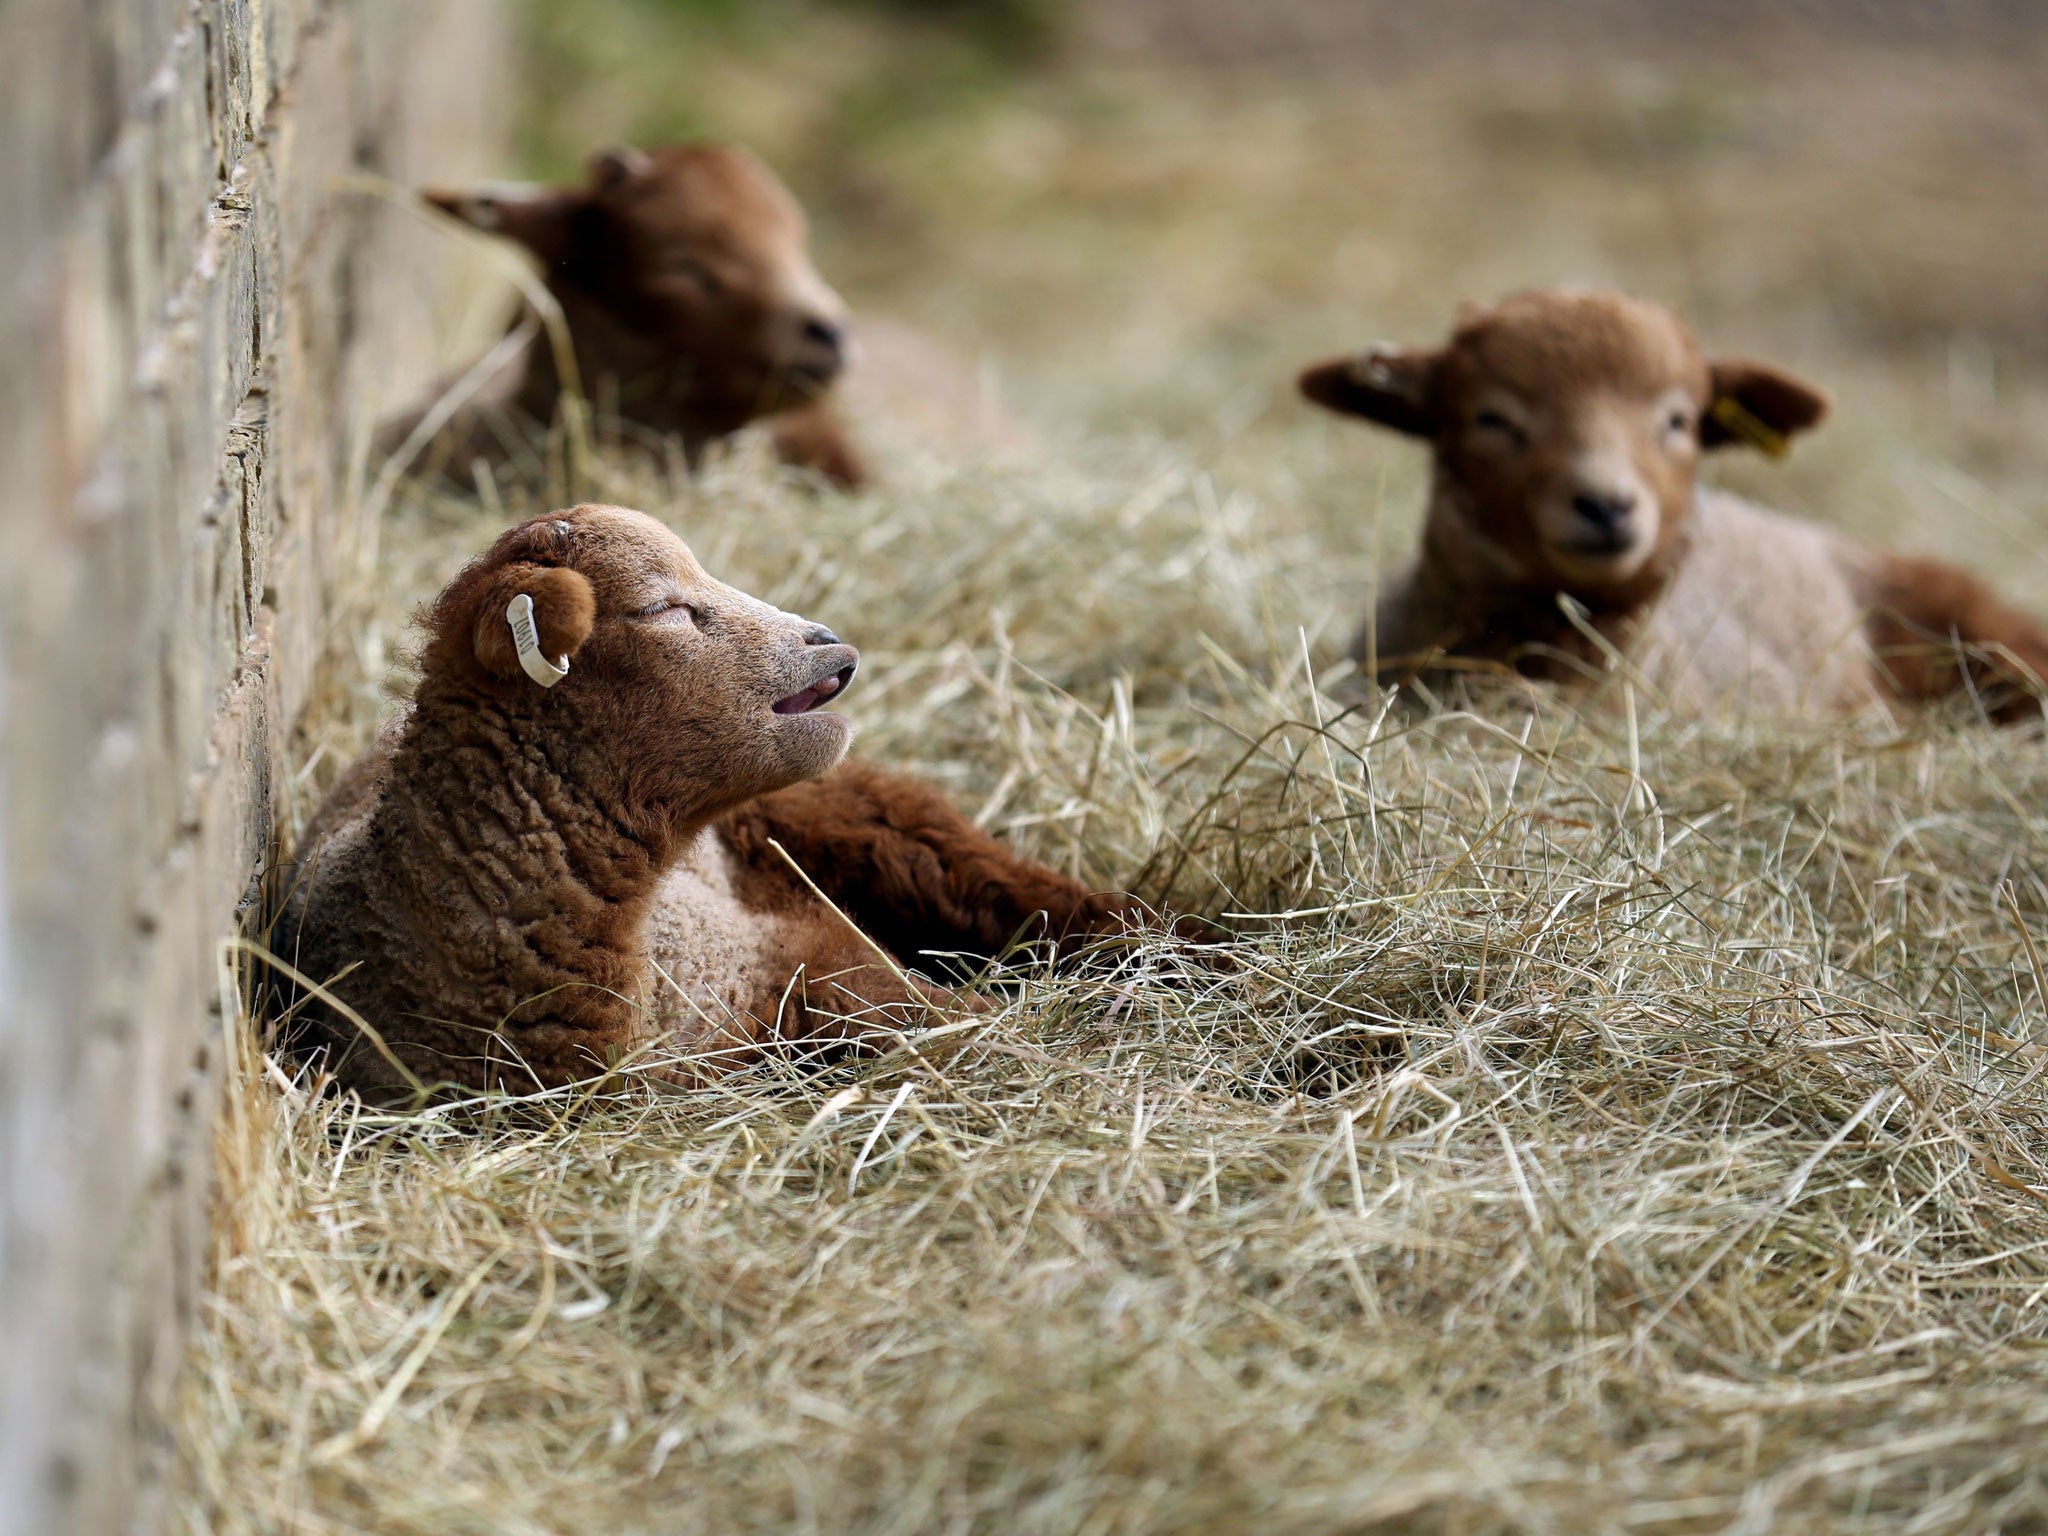 Rare breed newborn Portland lambs soak up the early spring sunshine at Wimpole Hall farm in Cambridgeshire